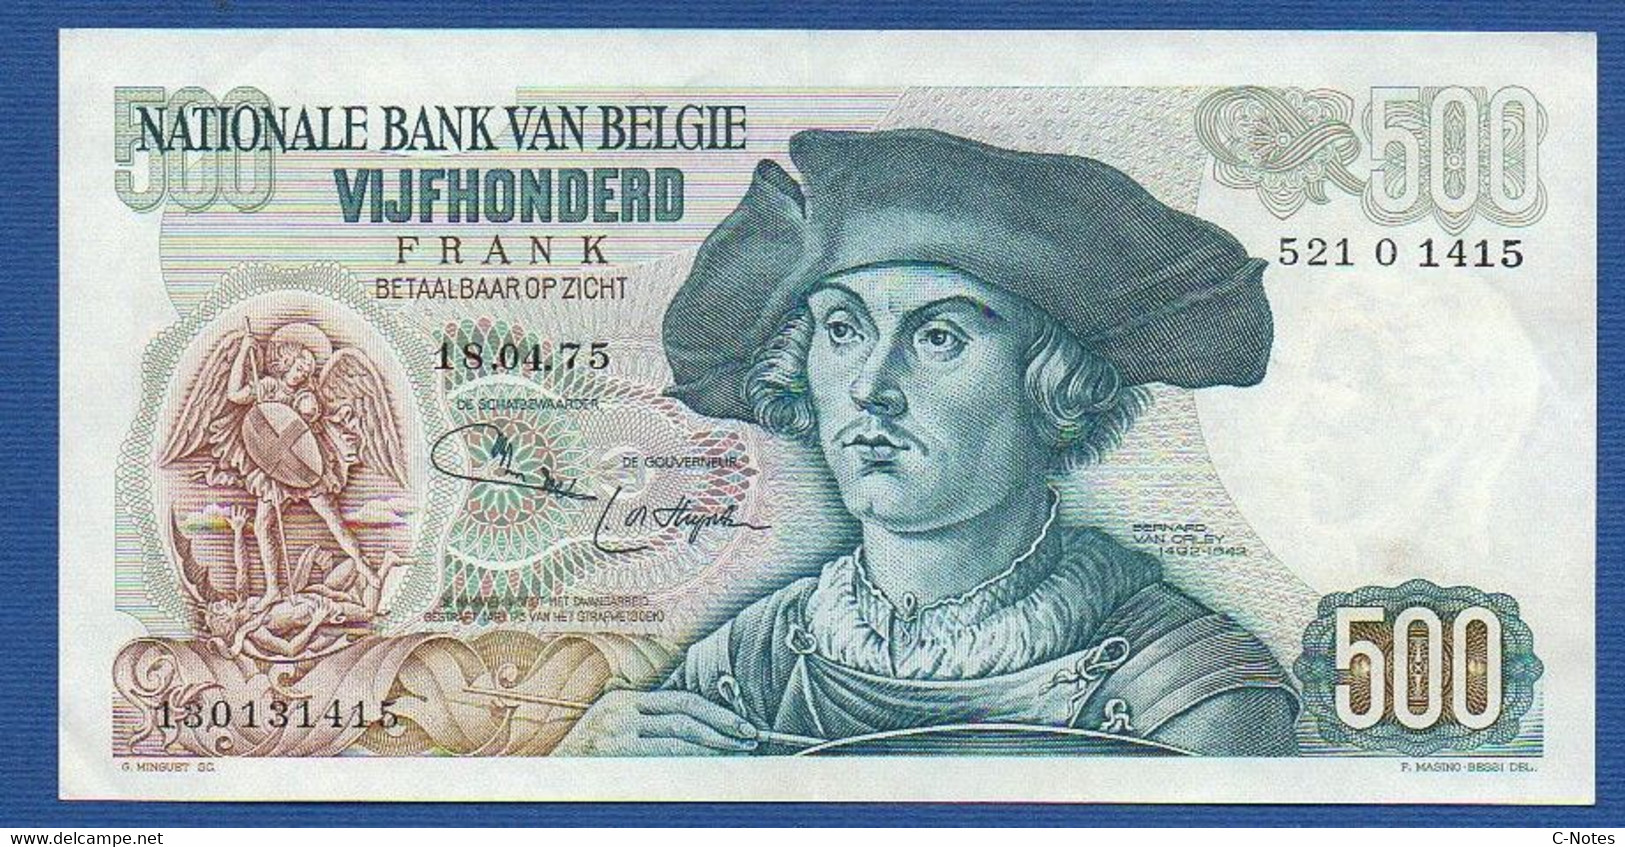 BELGIUM - P.135b(3) - 500 Francs 18.01.1975 XF/AU, Serie 521 O 1415 - 500 Francos